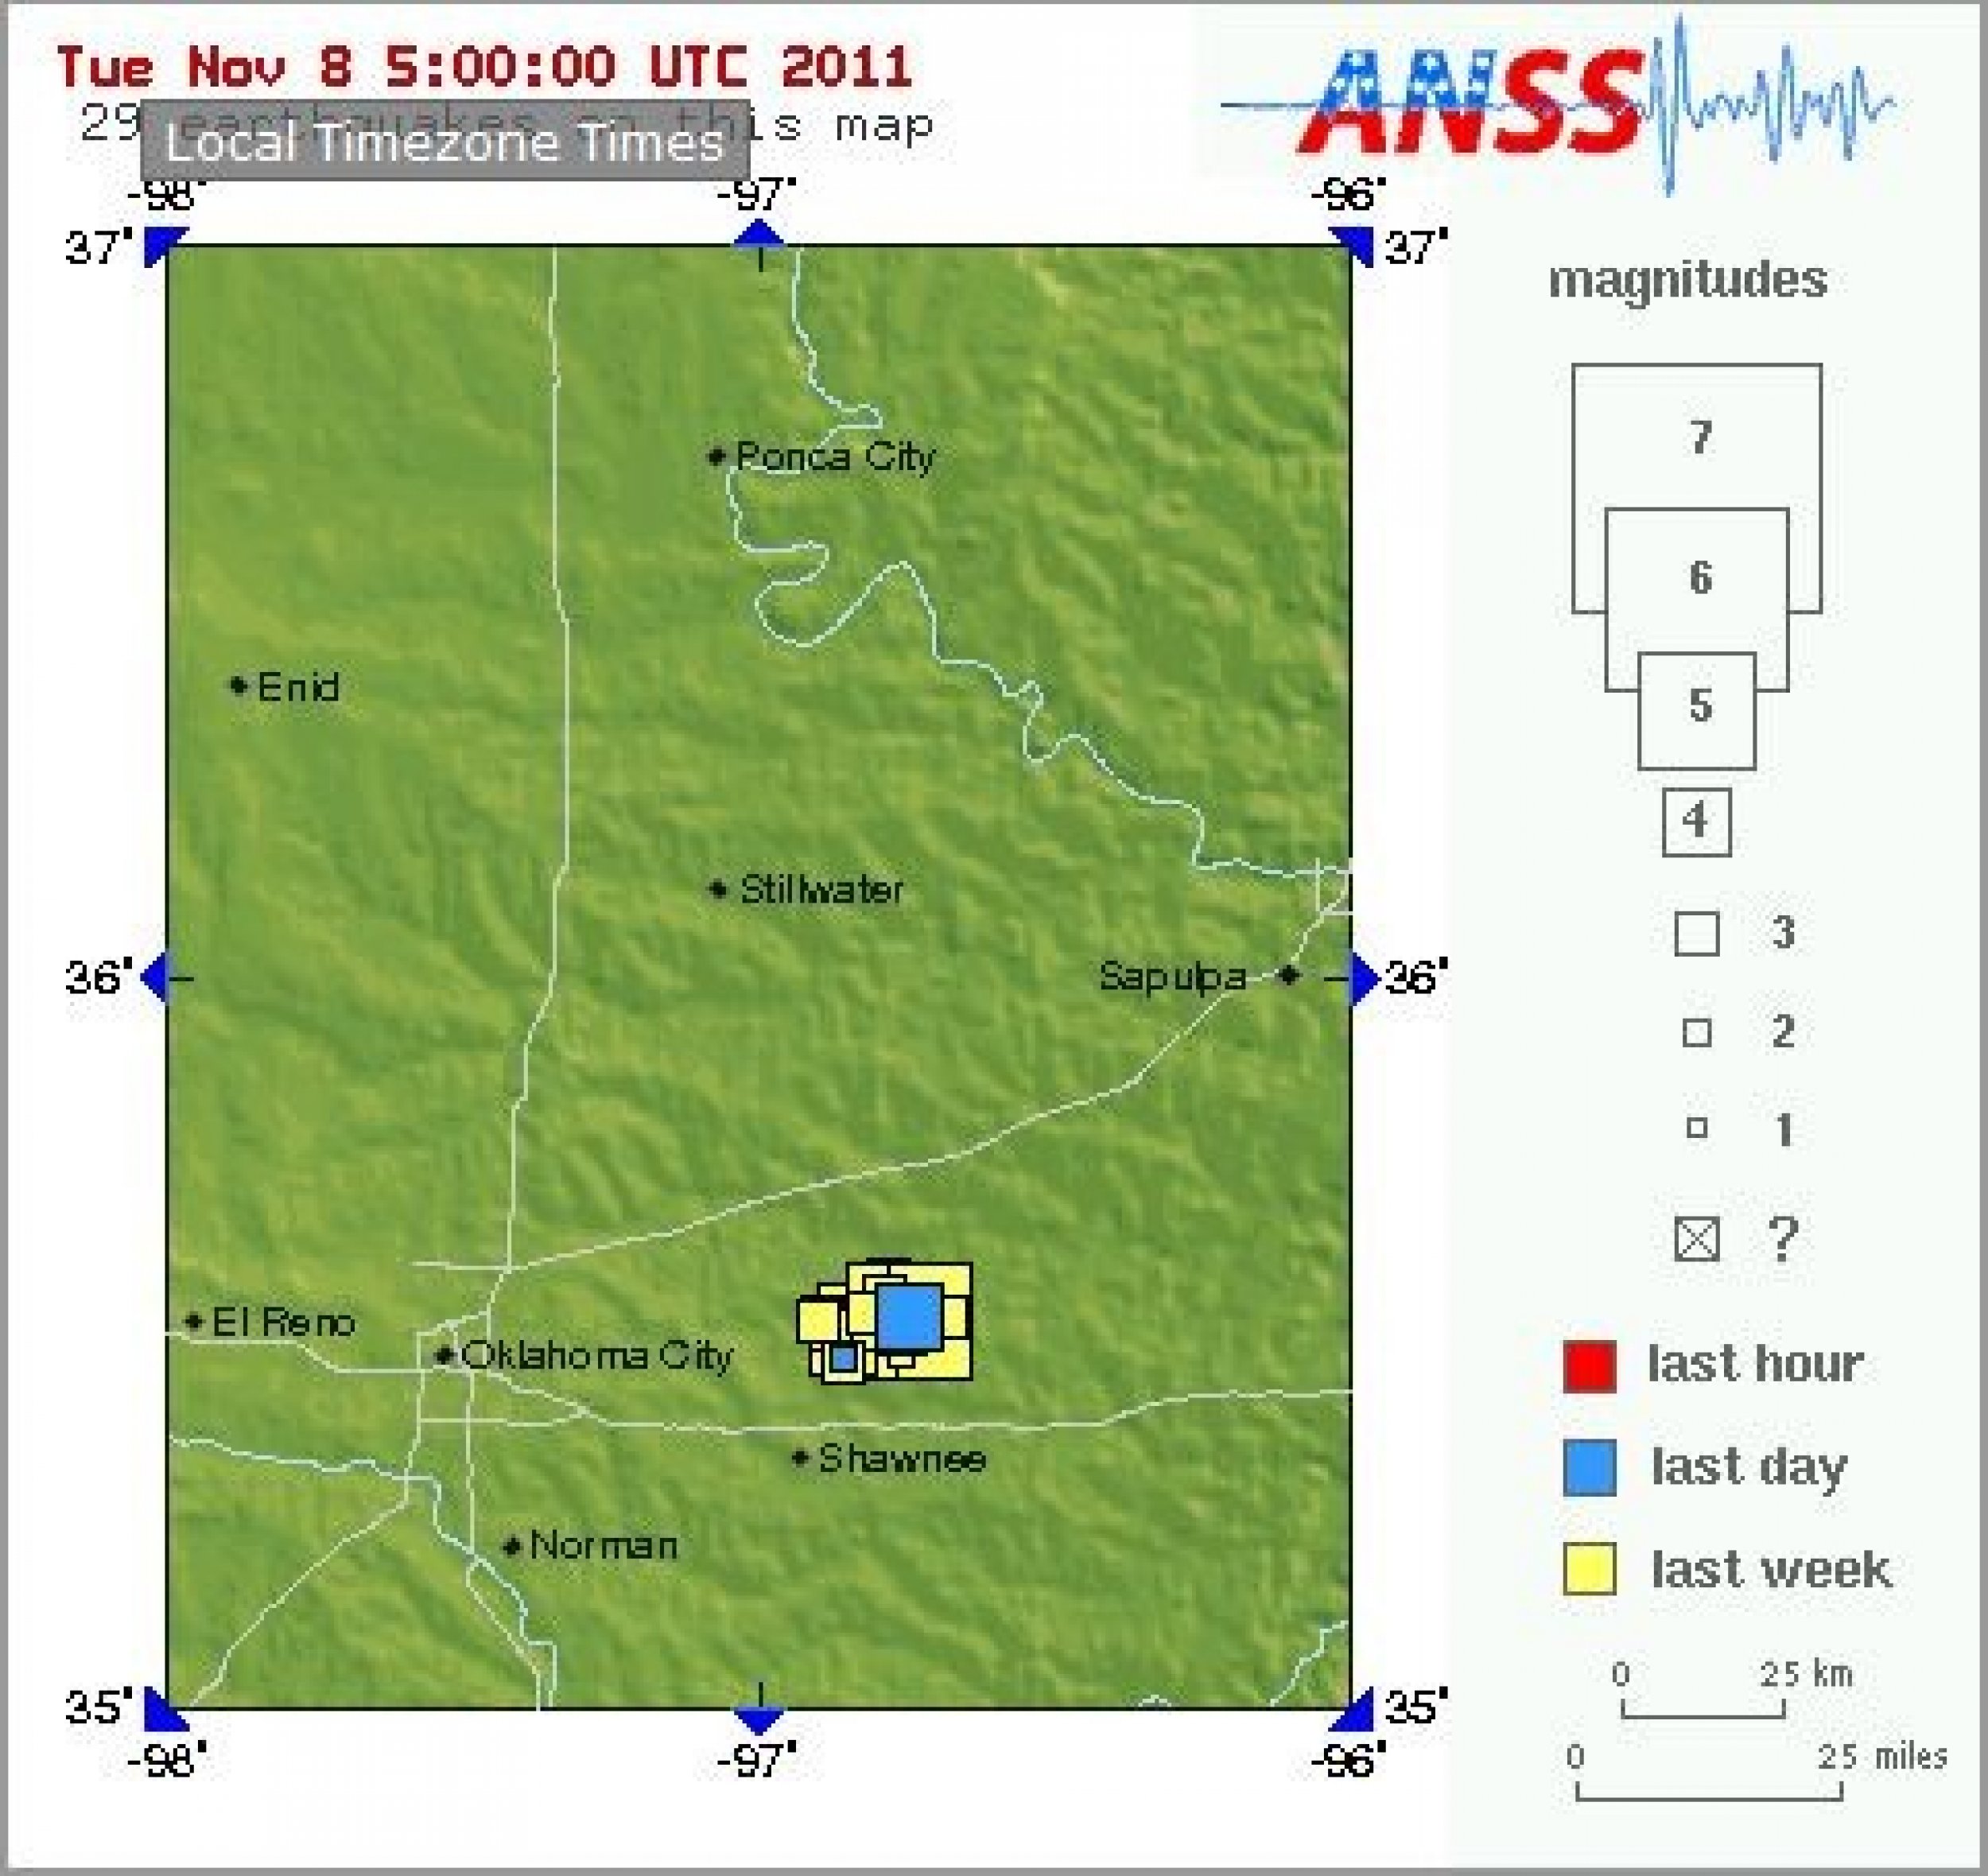 oklahoma quake map 2015